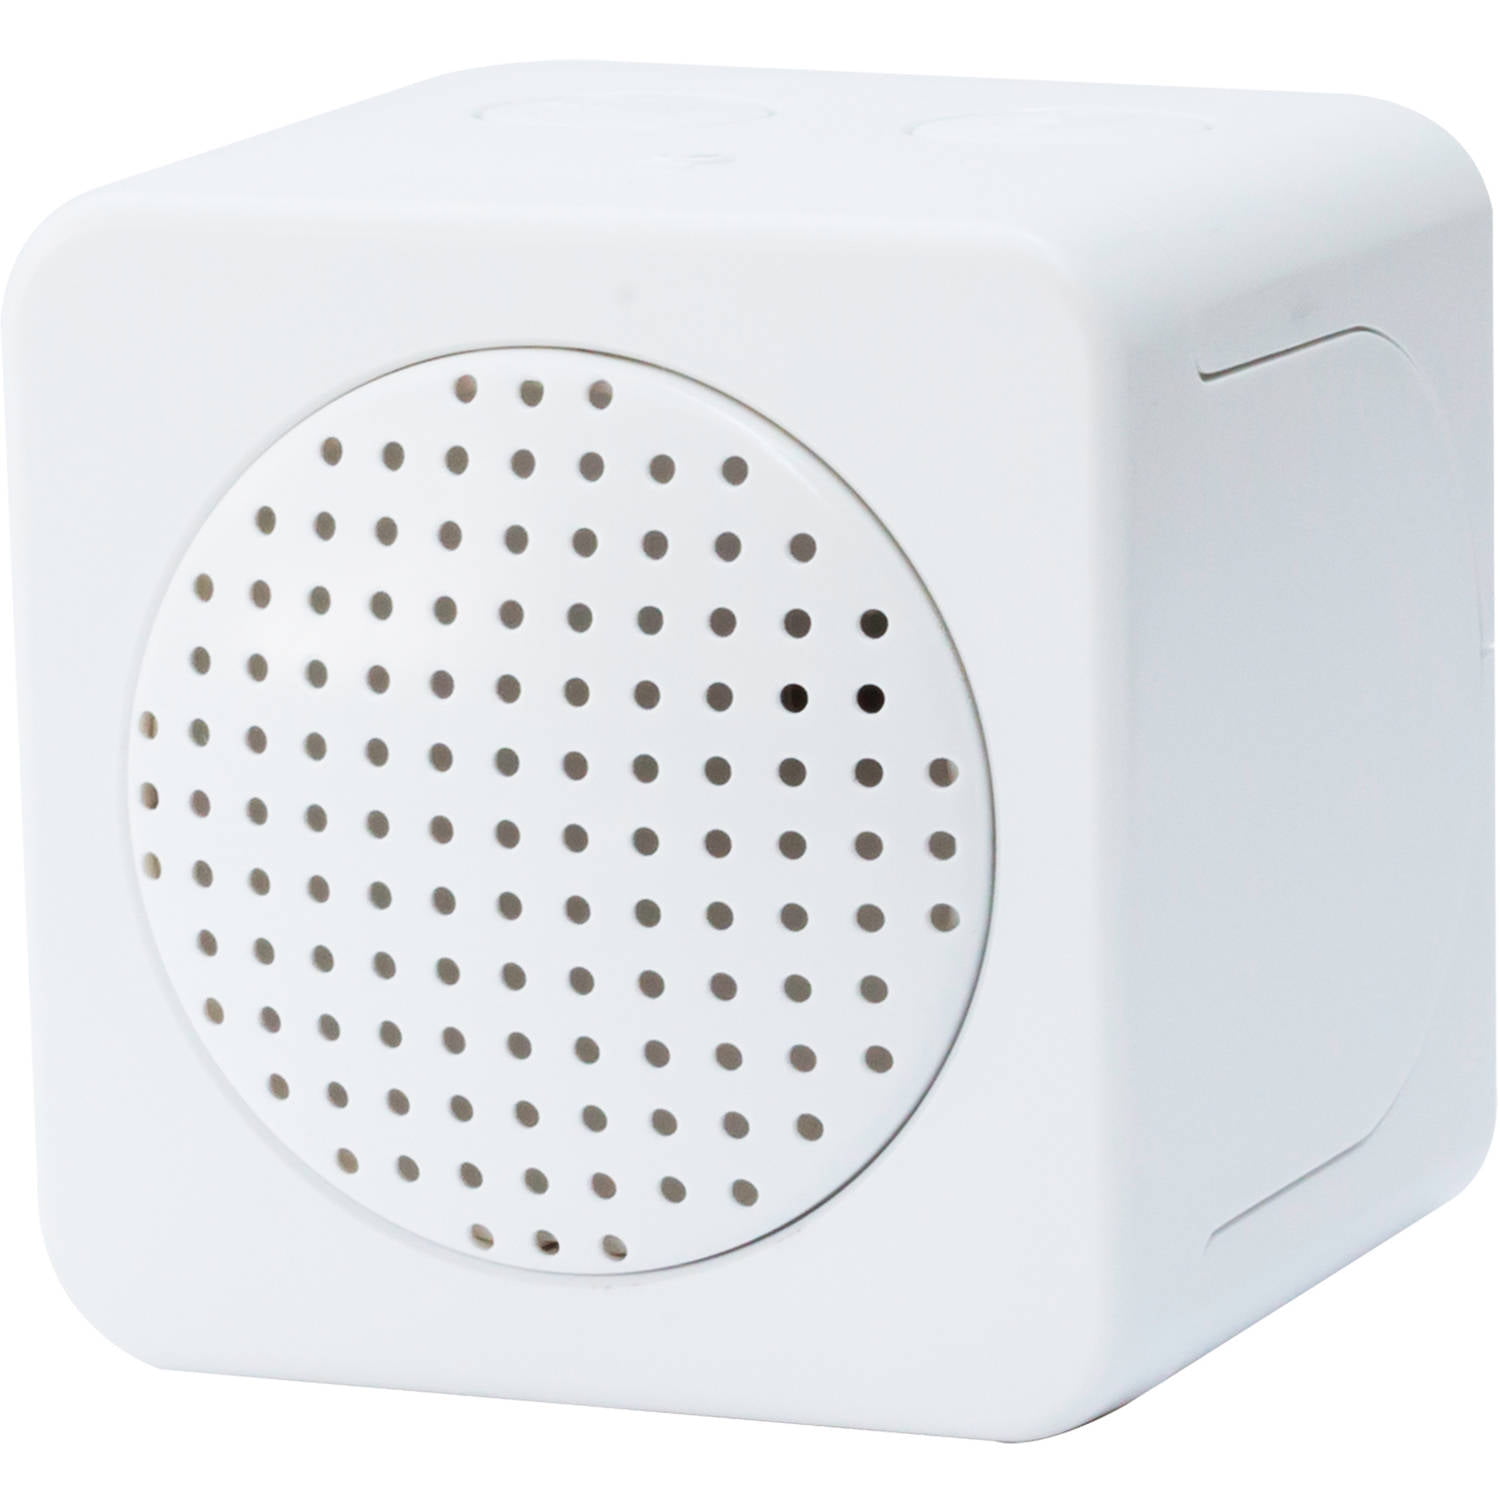 Kidde Remote Lync Home Monitoring Device Smoke & Carbon Monoxide Alarm